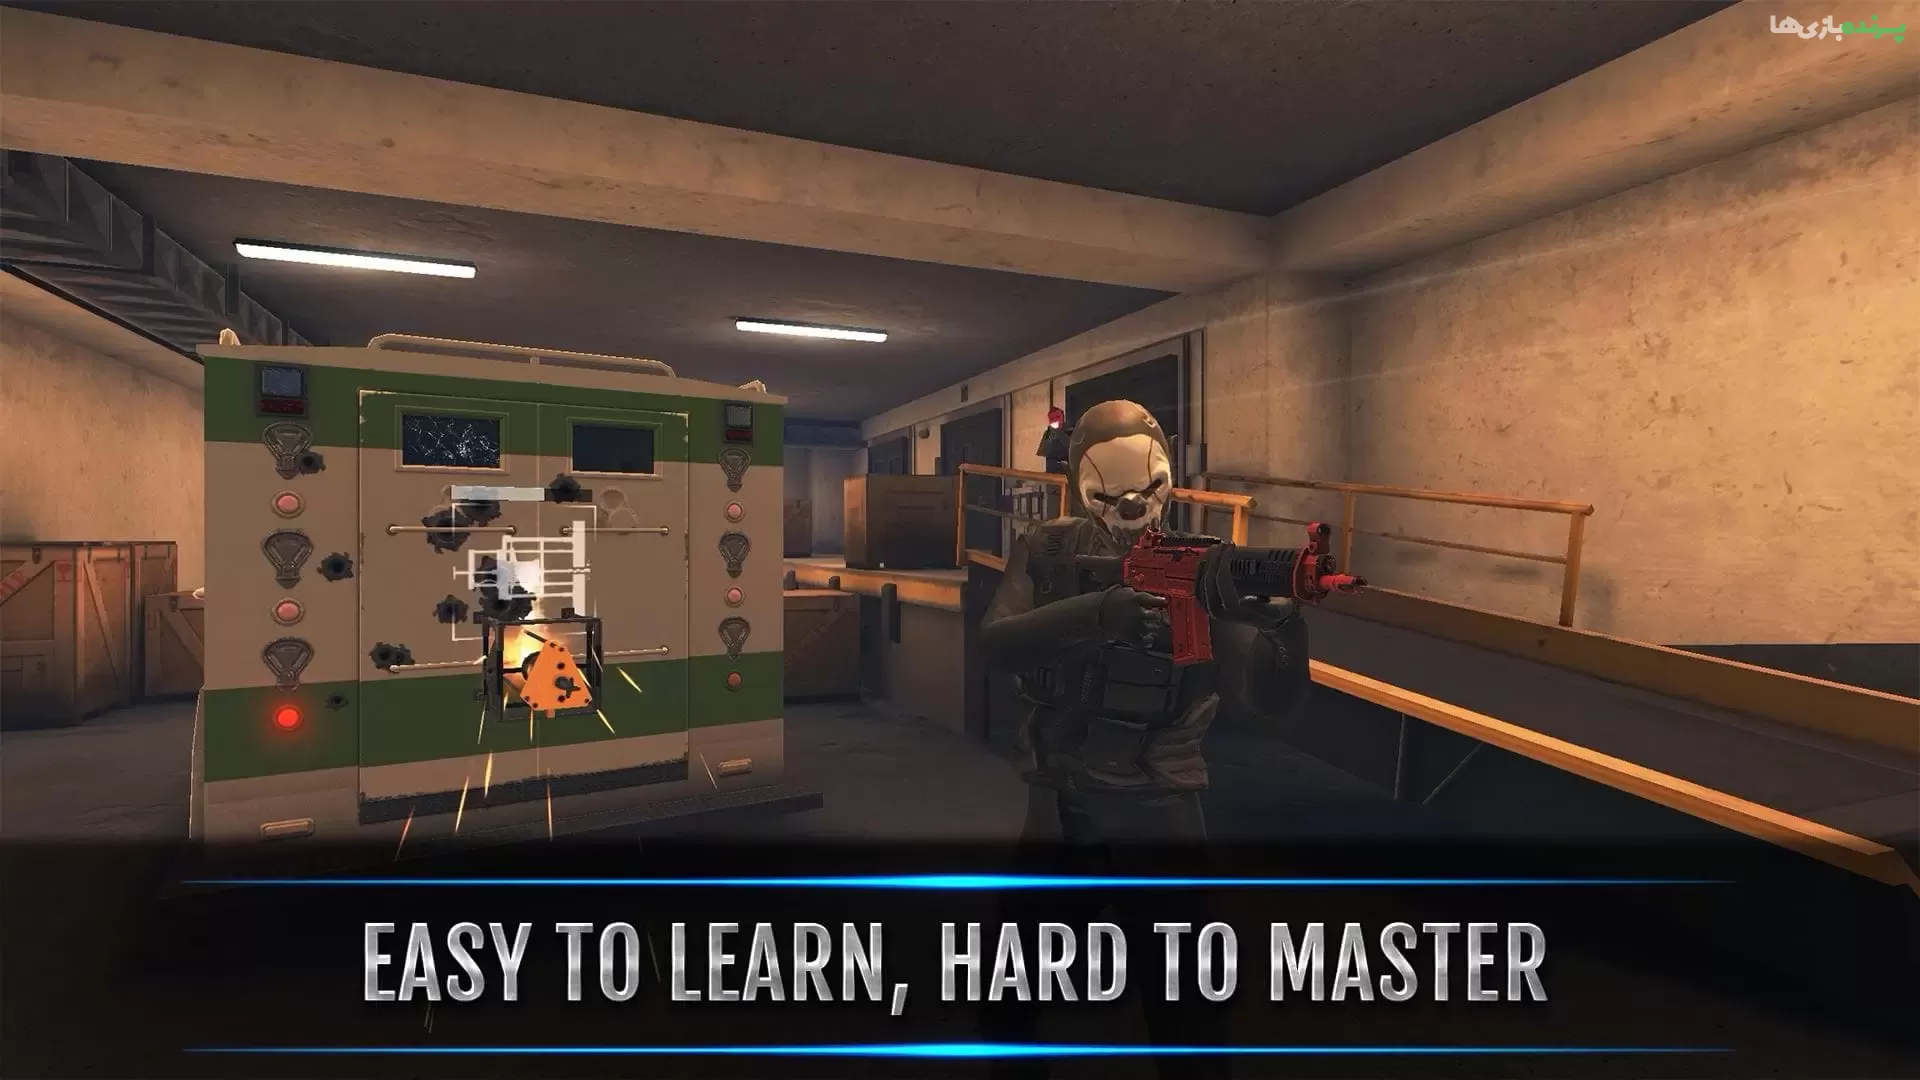 Armed Heist 3.0.0 – آپدیت جدید بازی اکشن “سرقت‌مسلحانه” اندروید + دیتا